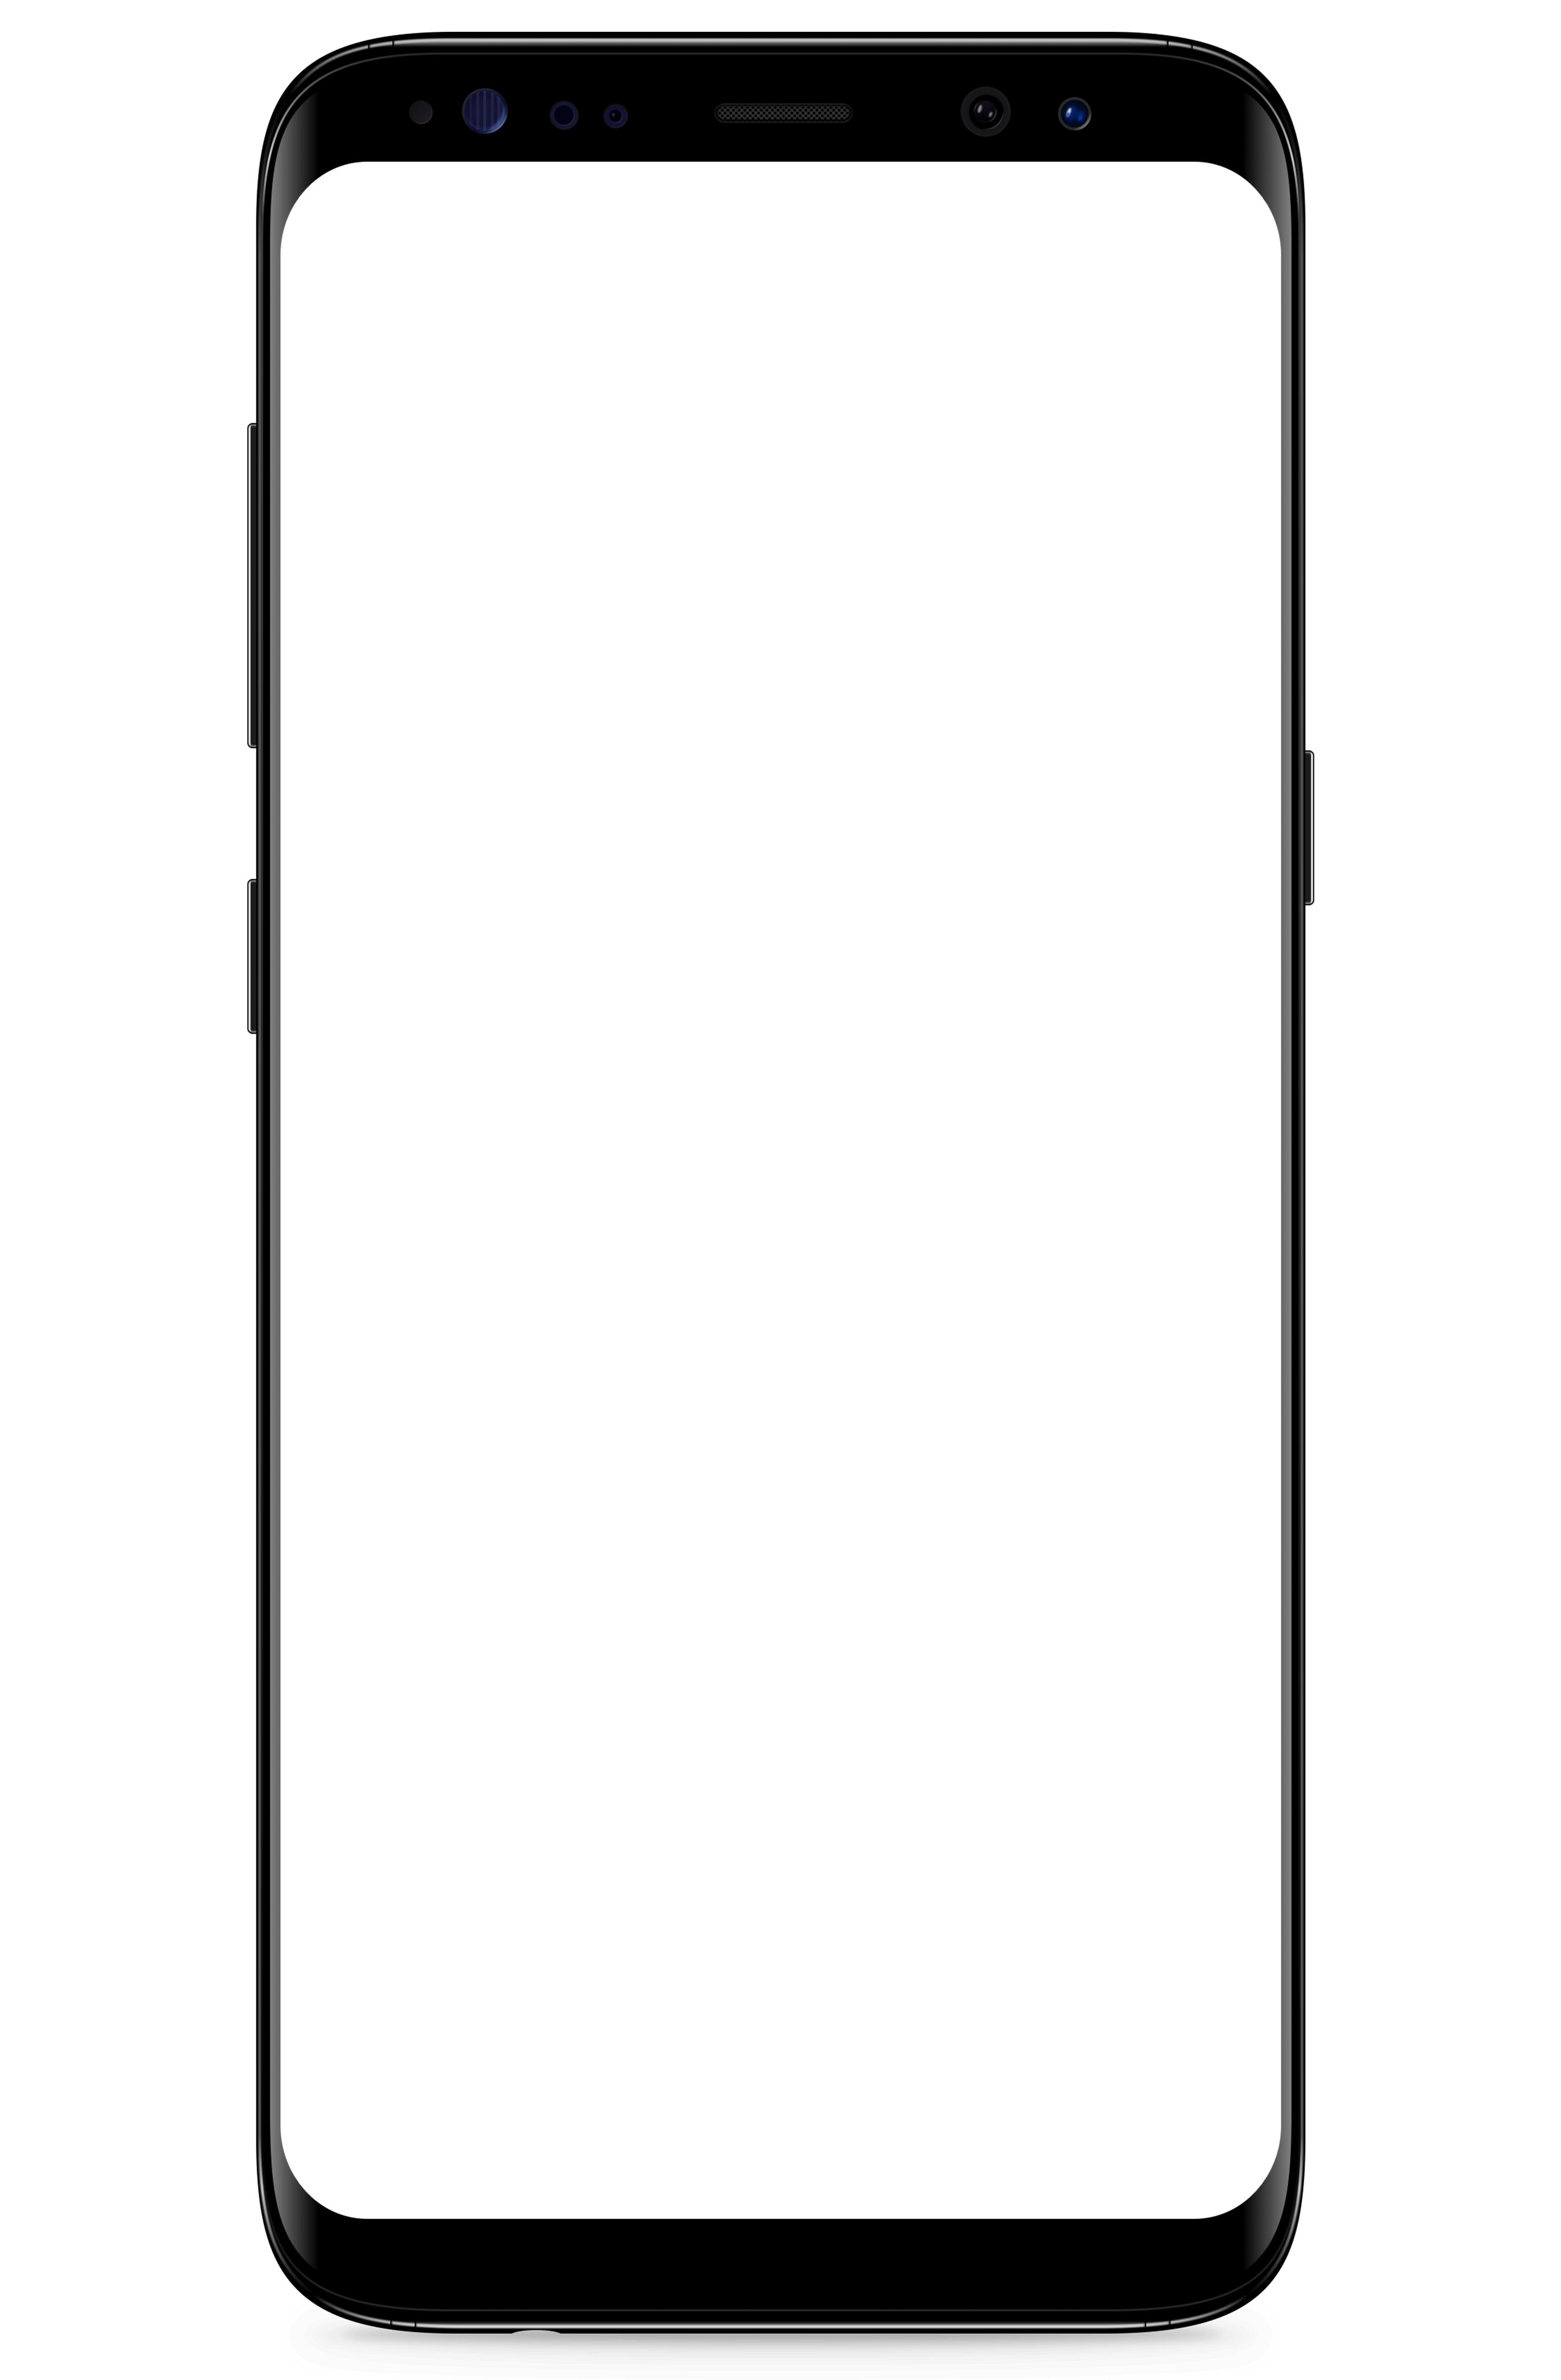 Samsung Galaxy S8 Black transparent background.